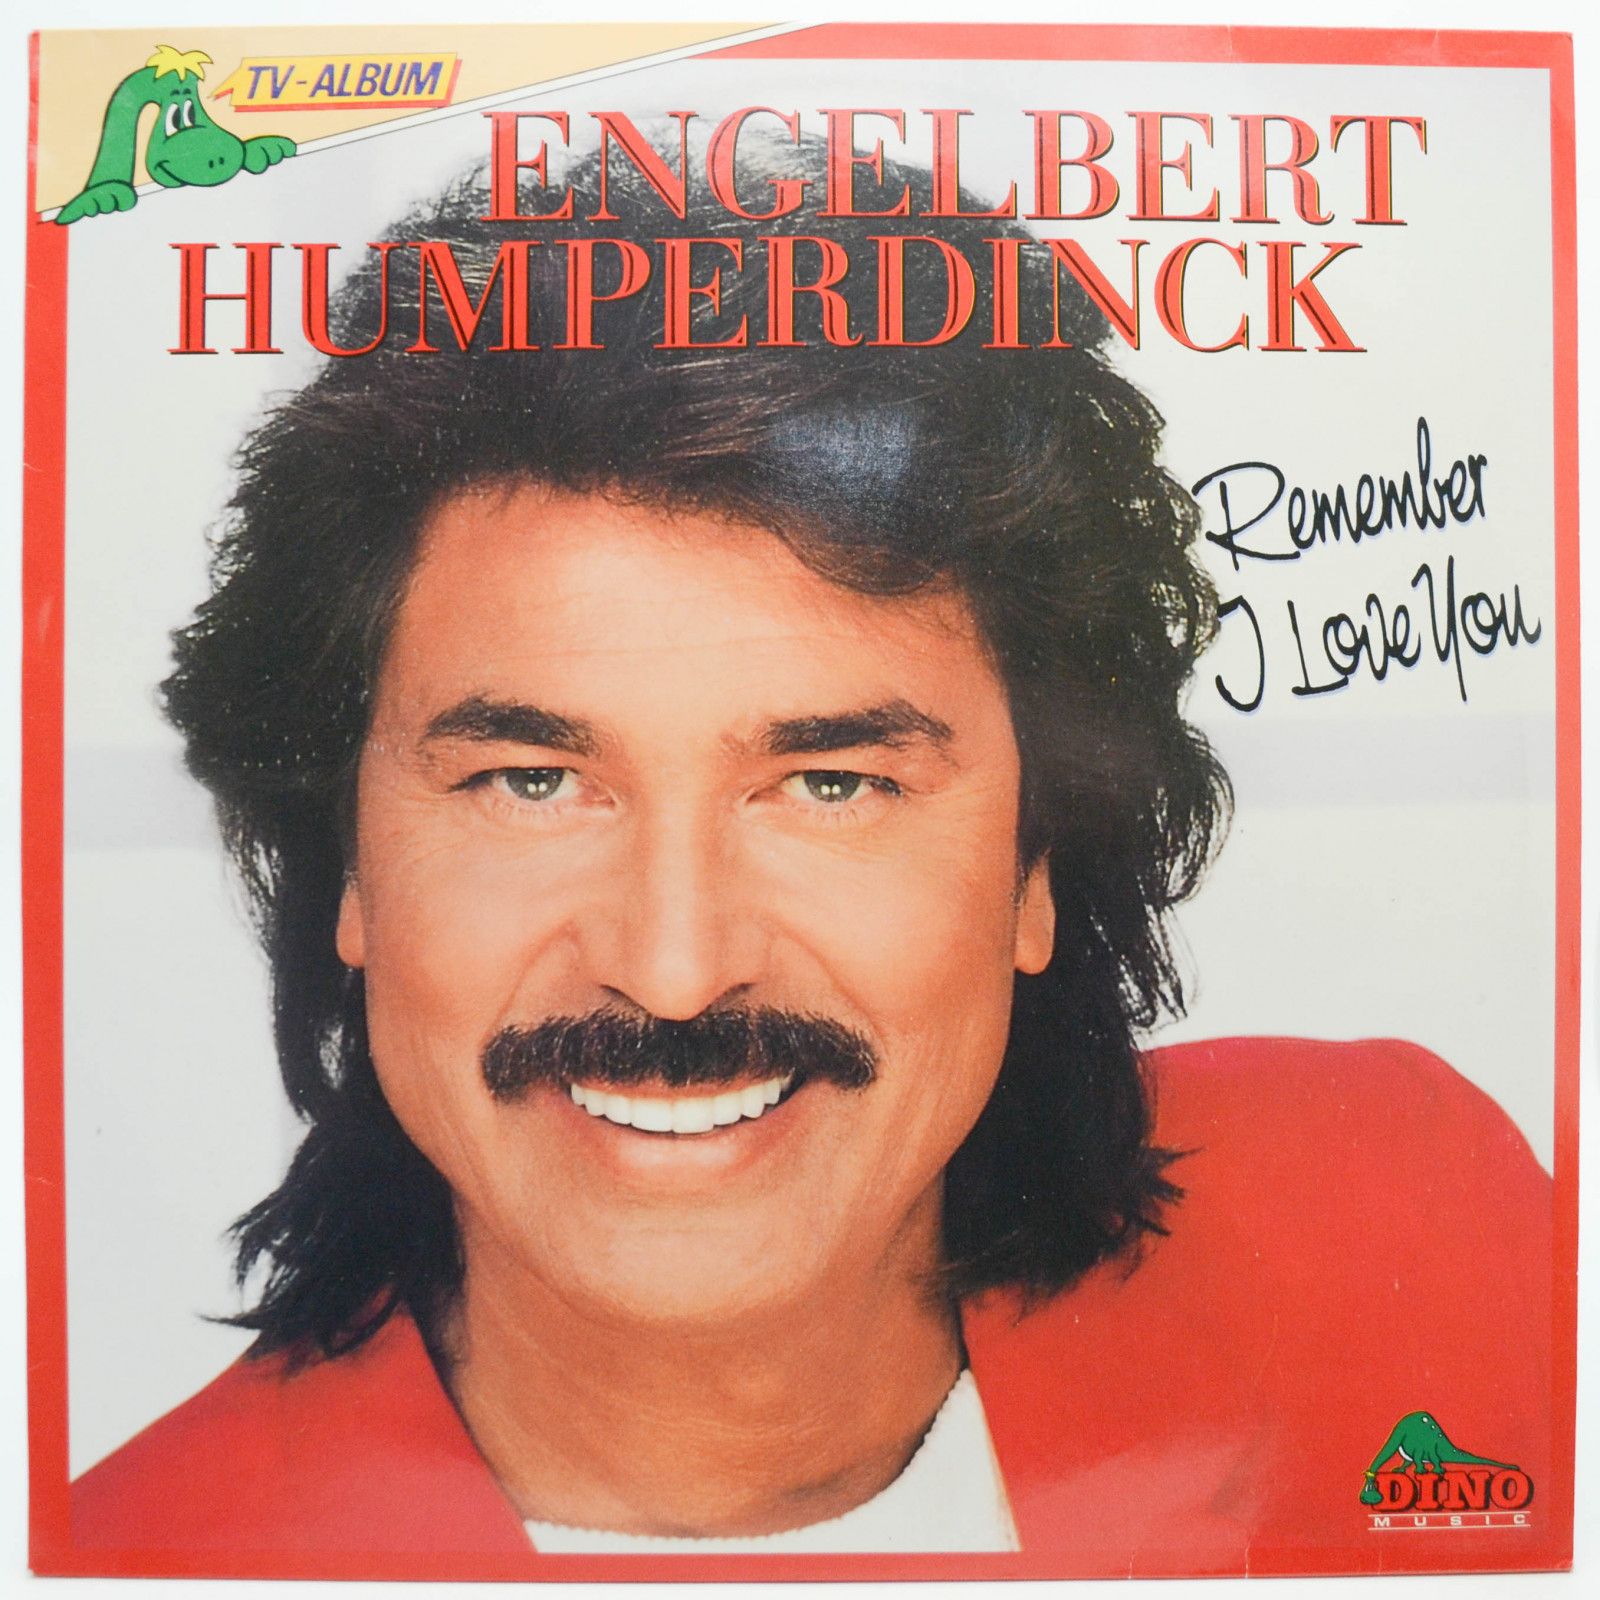 Engelbert Humperdinck — Remember - I Love You, 1987